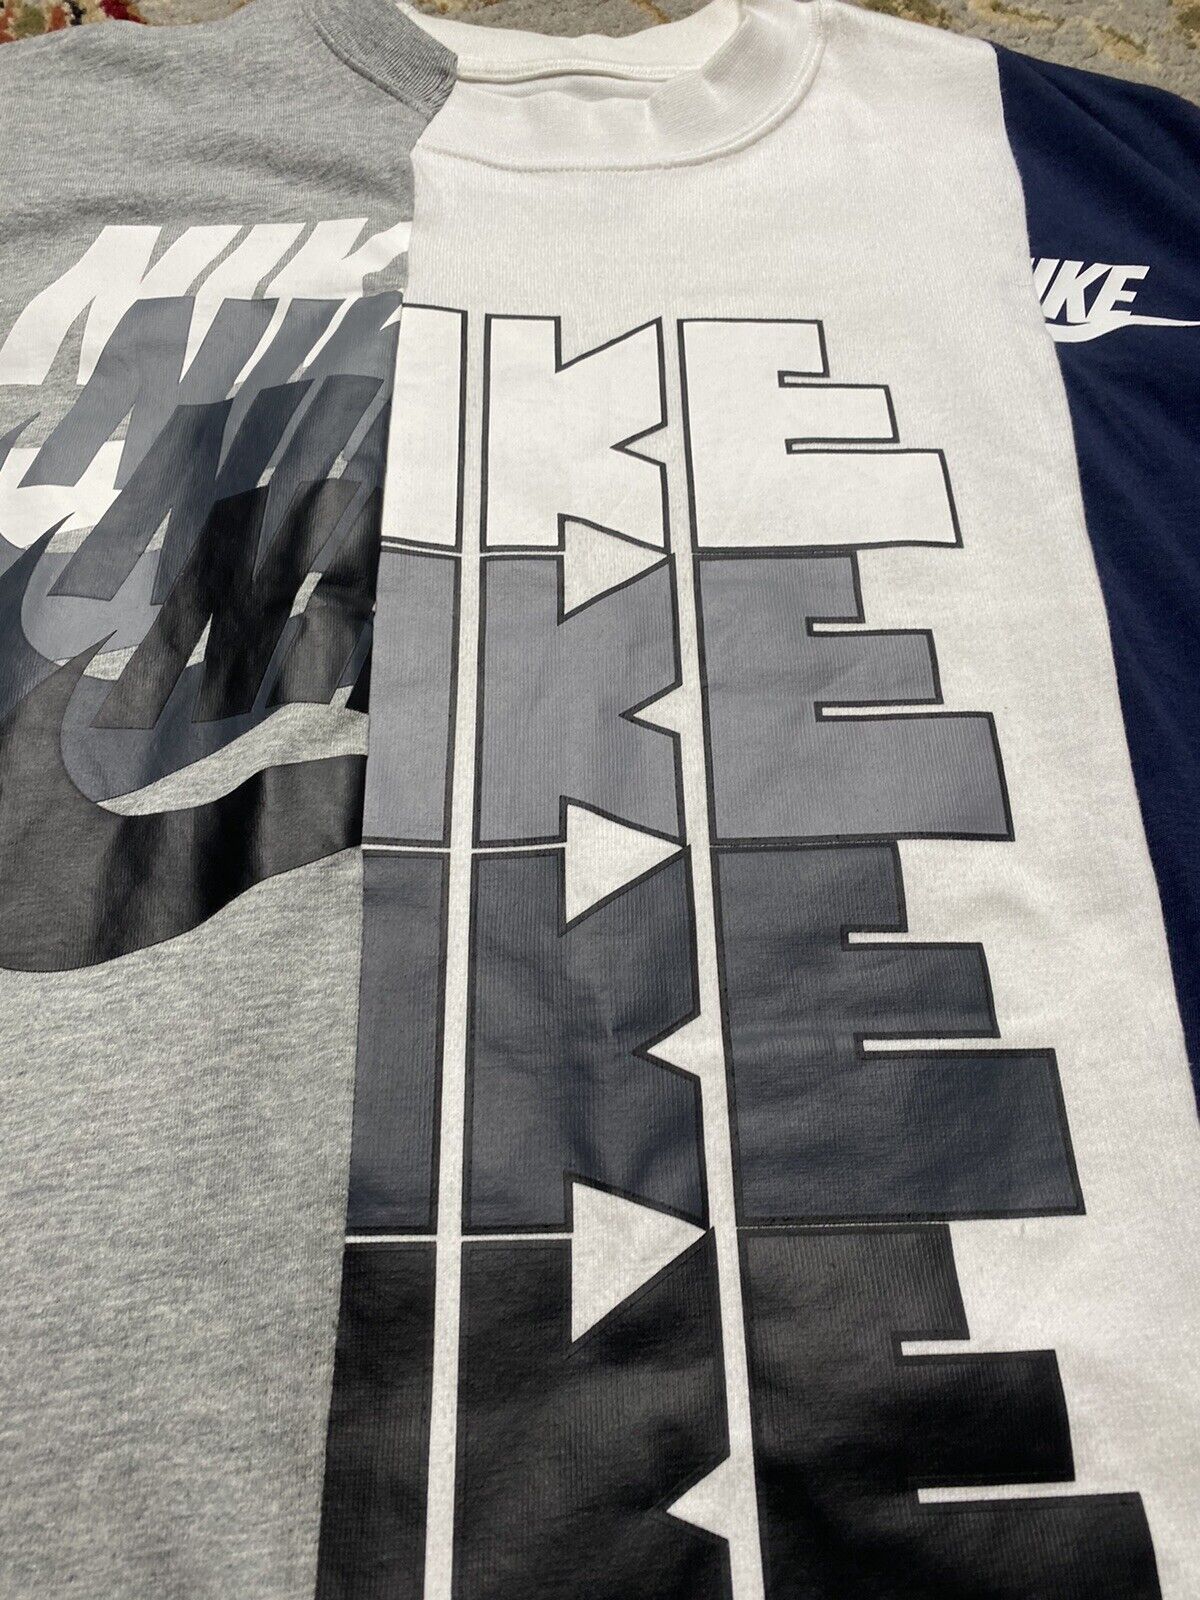 Nike X Sacai T Shirt Men's Small Rare Preowned | eBay